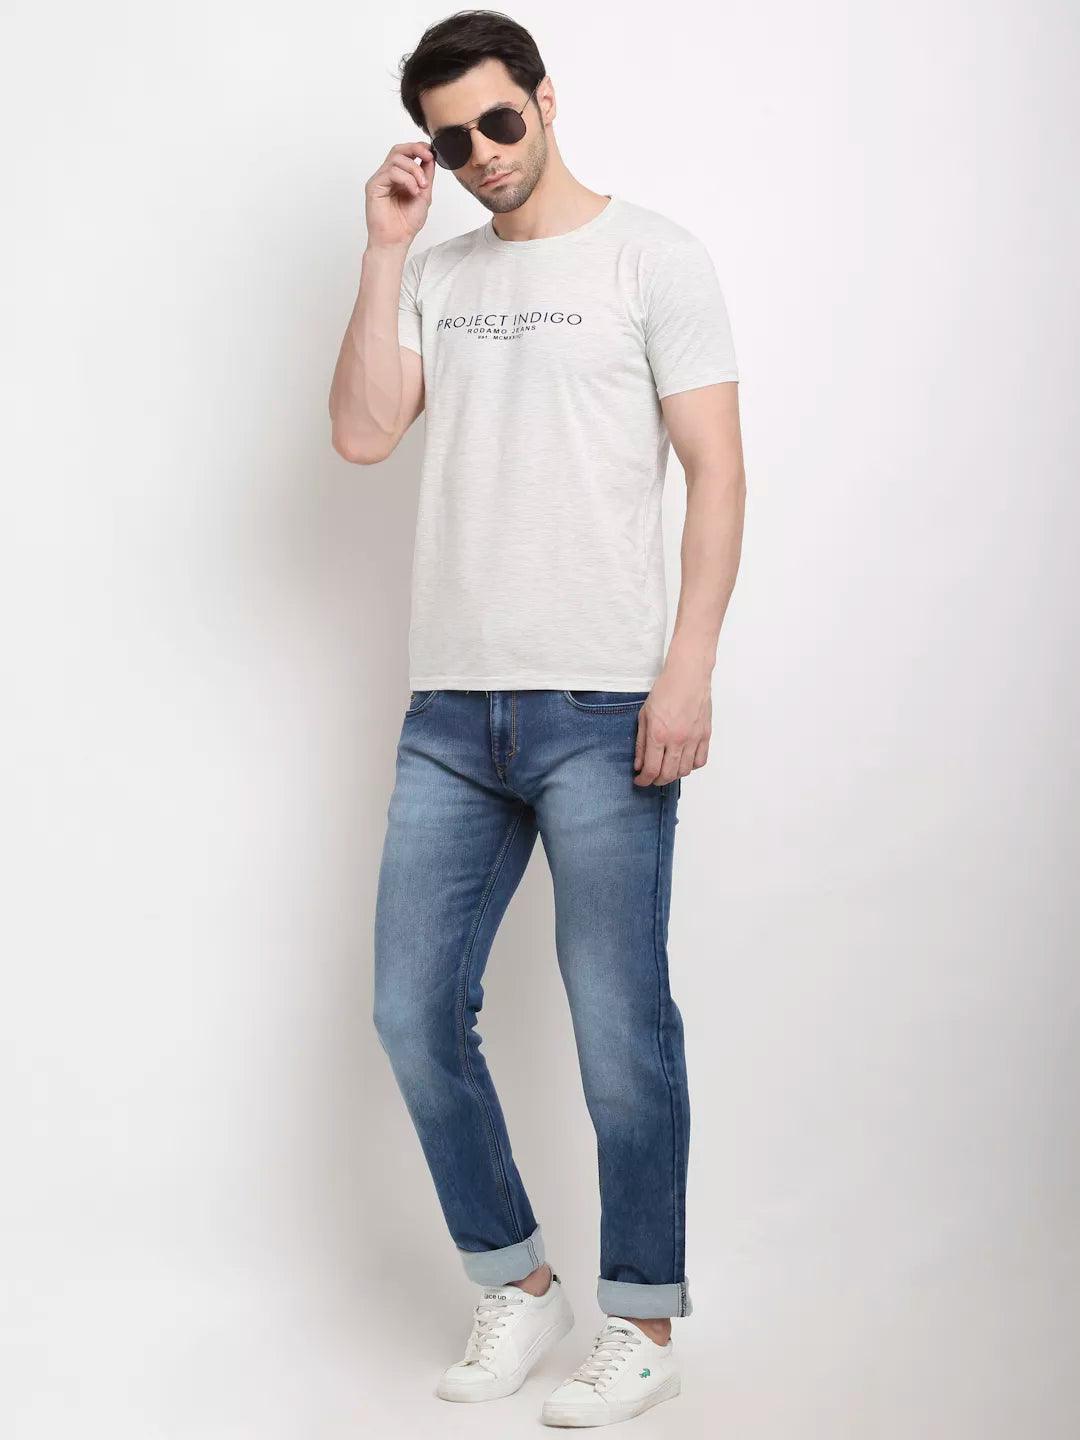 Rodamo Cotton Printed Gray_T-Shirt (Medium) - ShopIMO